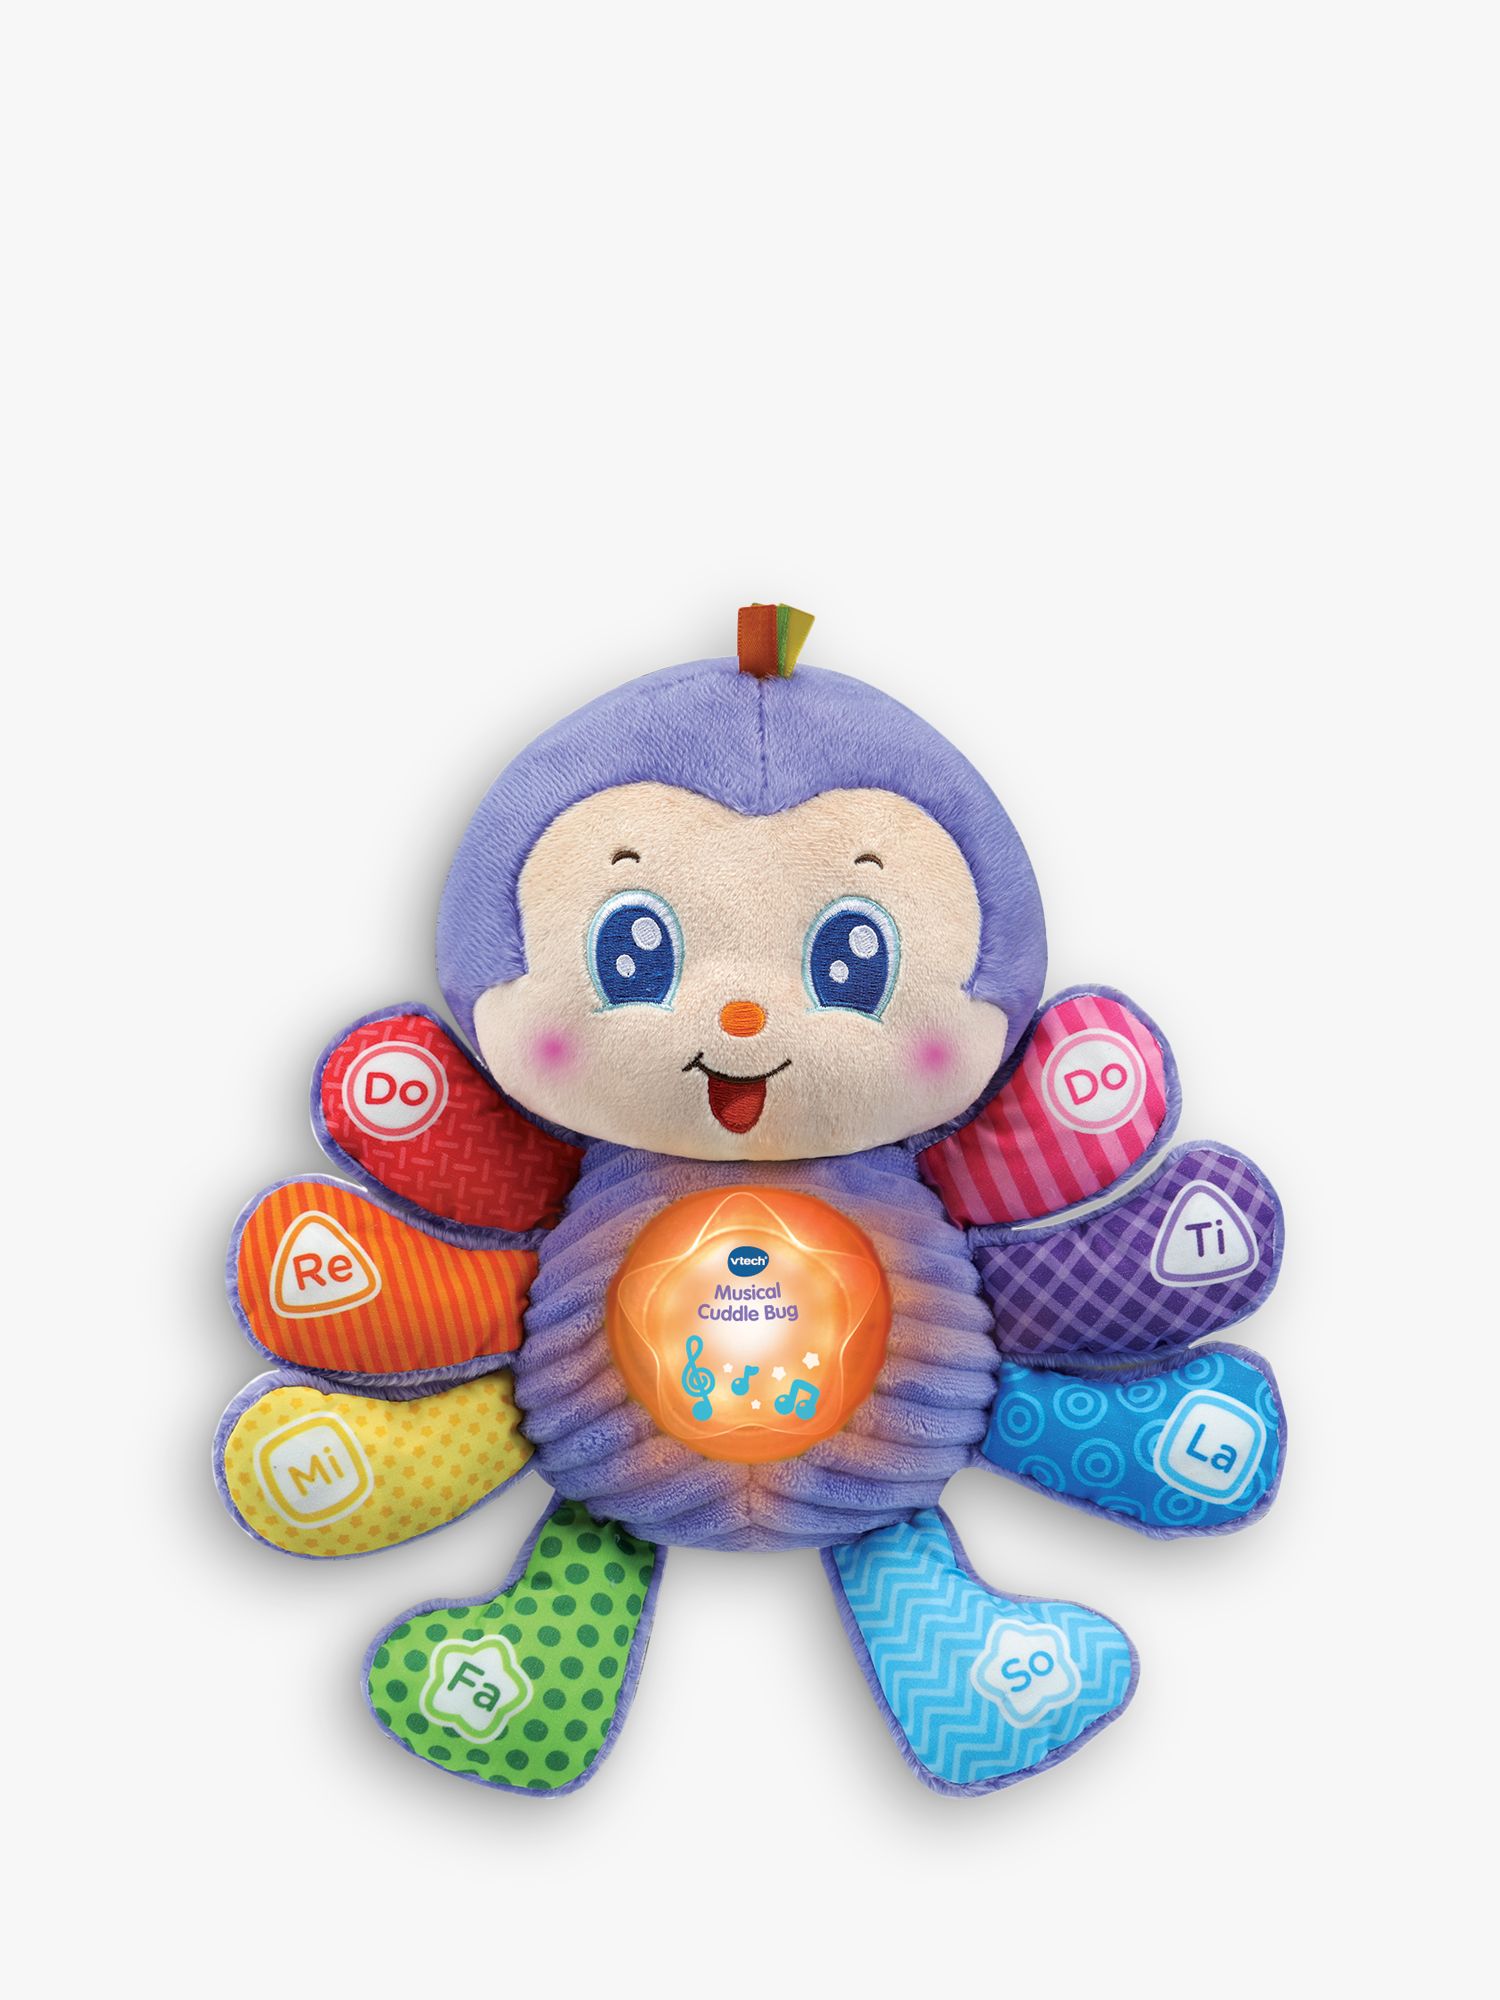 VTech 528603 Baby Musical Cuddle Bug Multicolour 